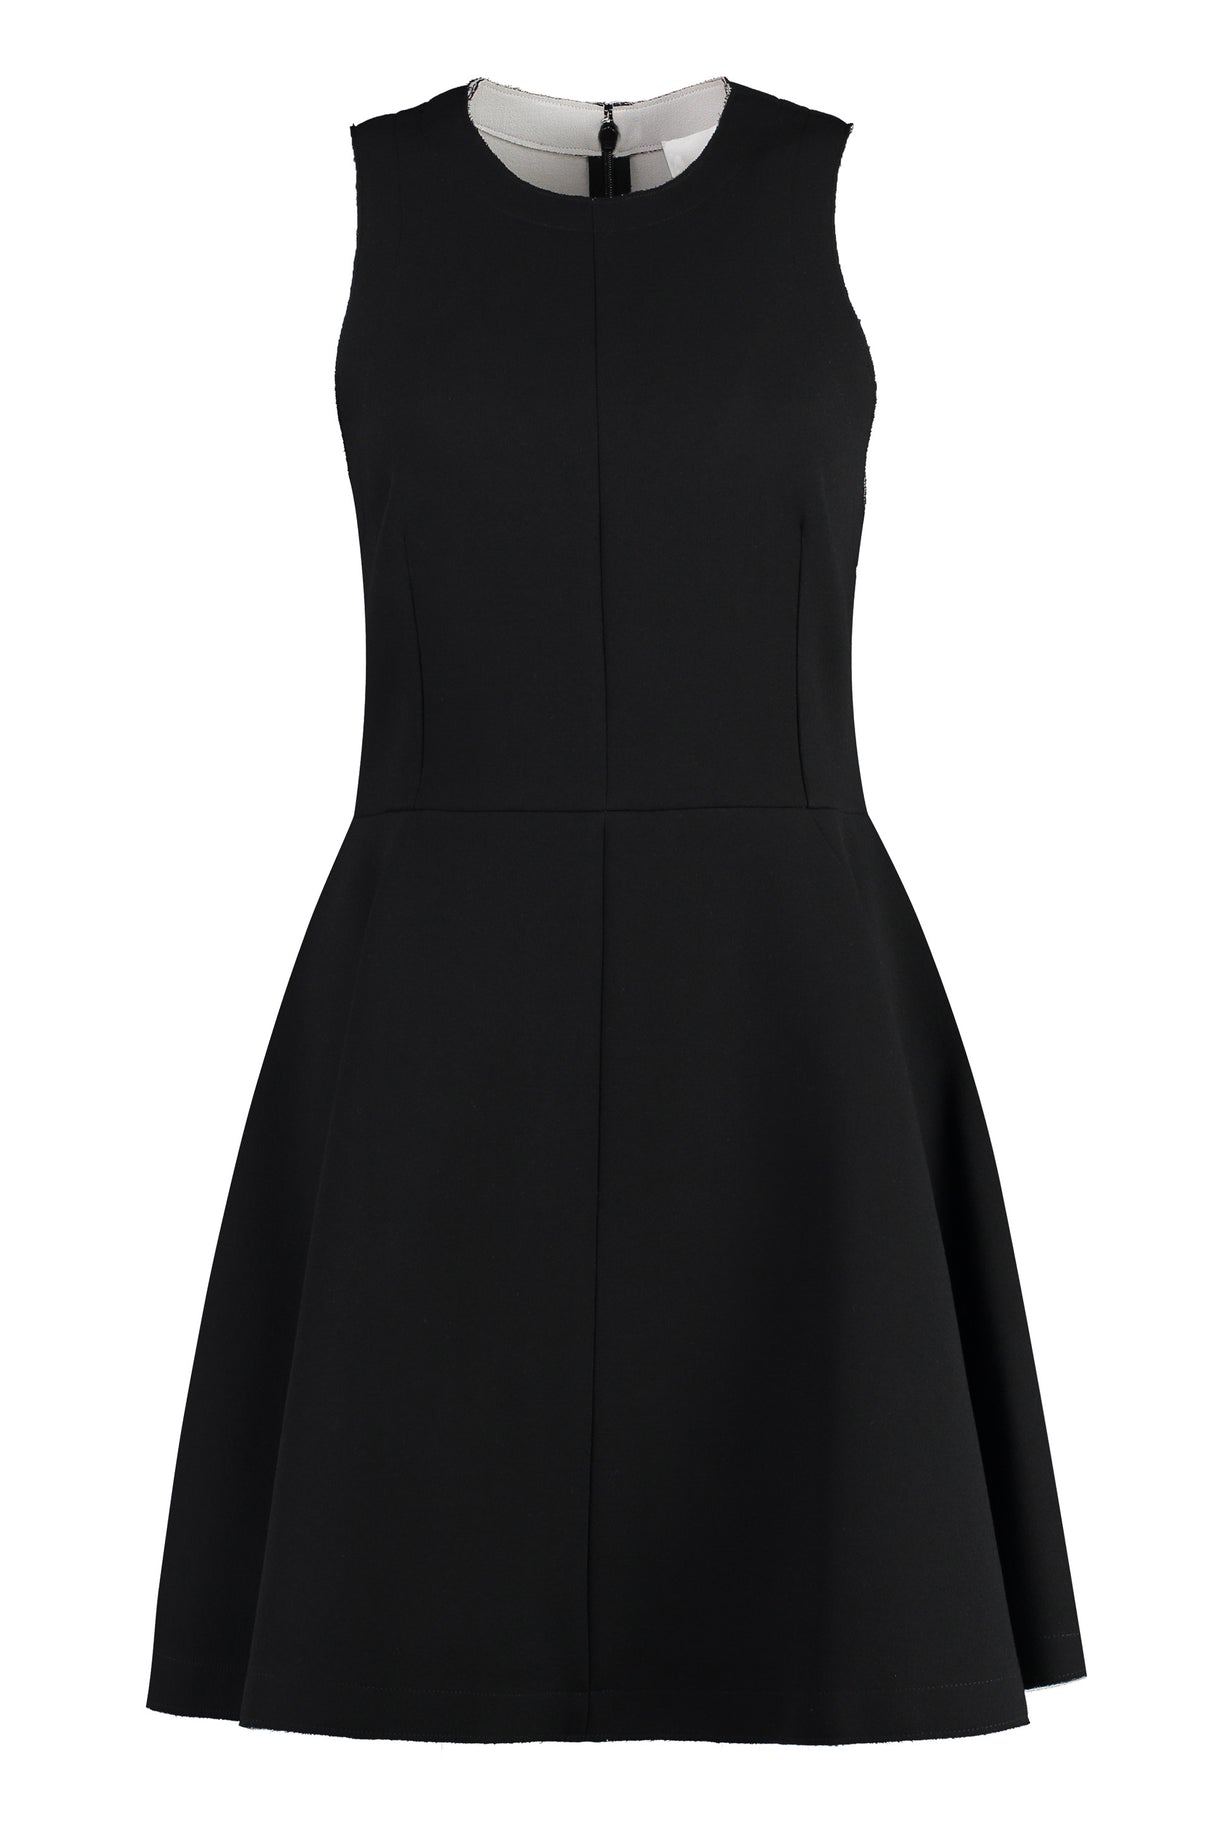 AMI PARIS Versatile Black Wool Dress for Women